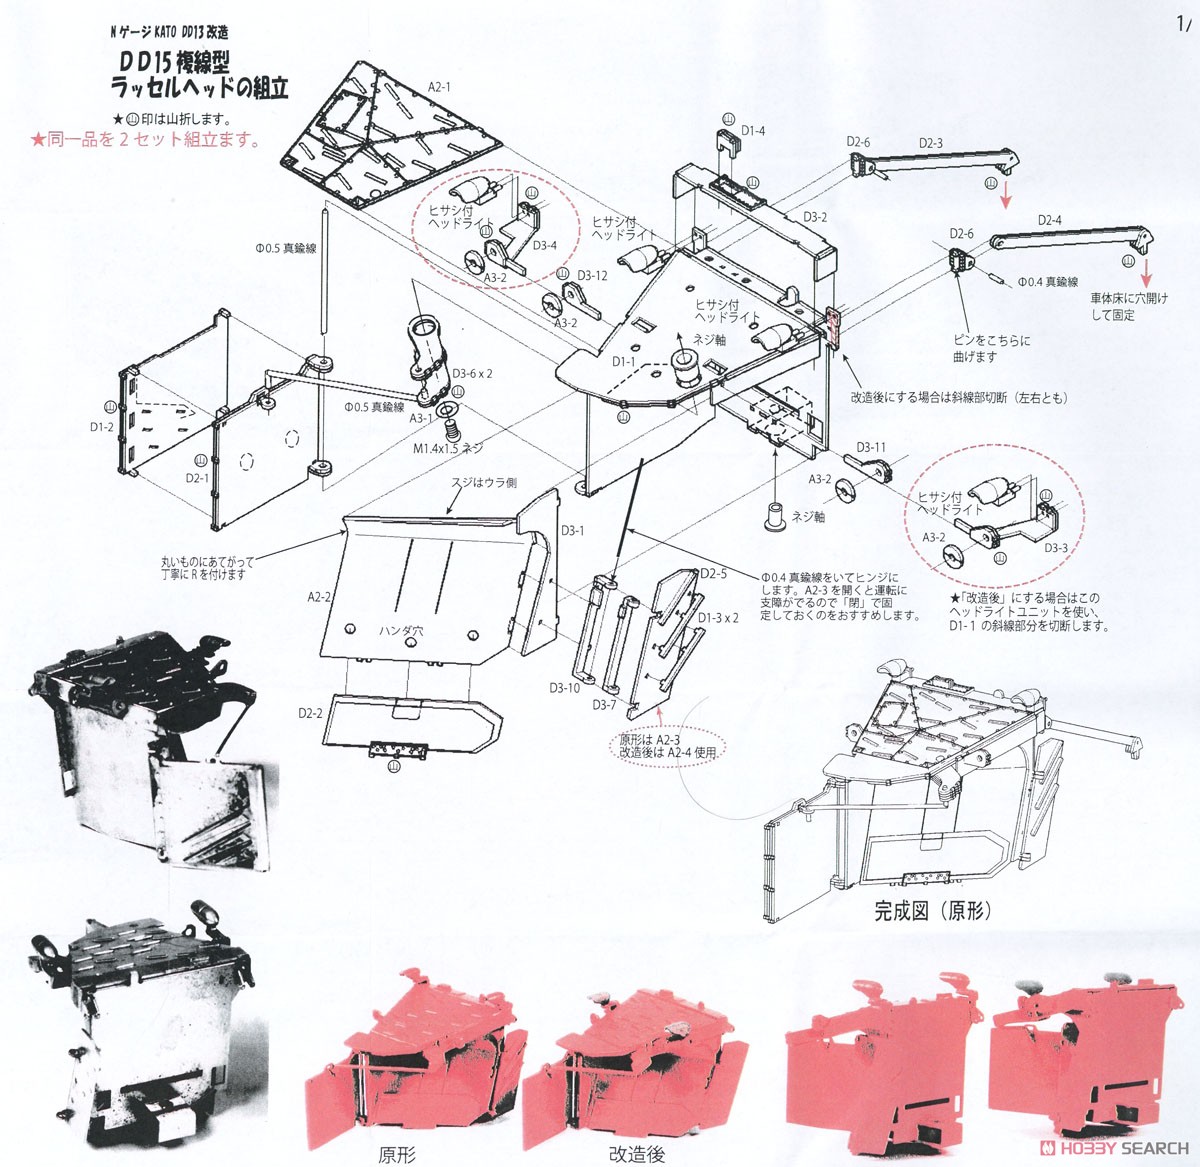 KATO DD13用 DD15複線型ラッセルヘッド 組立キット (組み立てキット) (鉄道模型) 設計図1